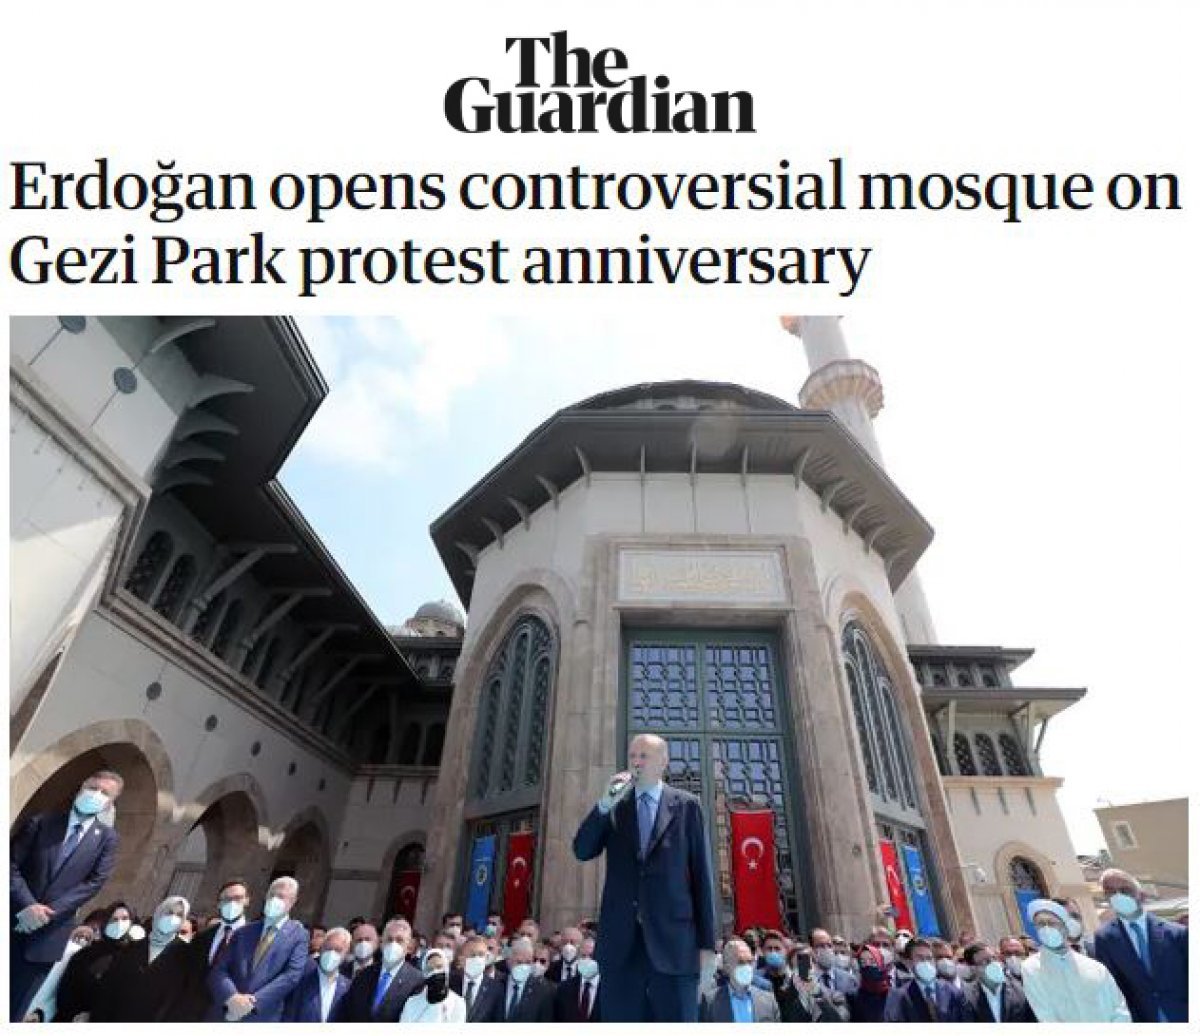 The British press was disturbed by the Taksim Mosque #2